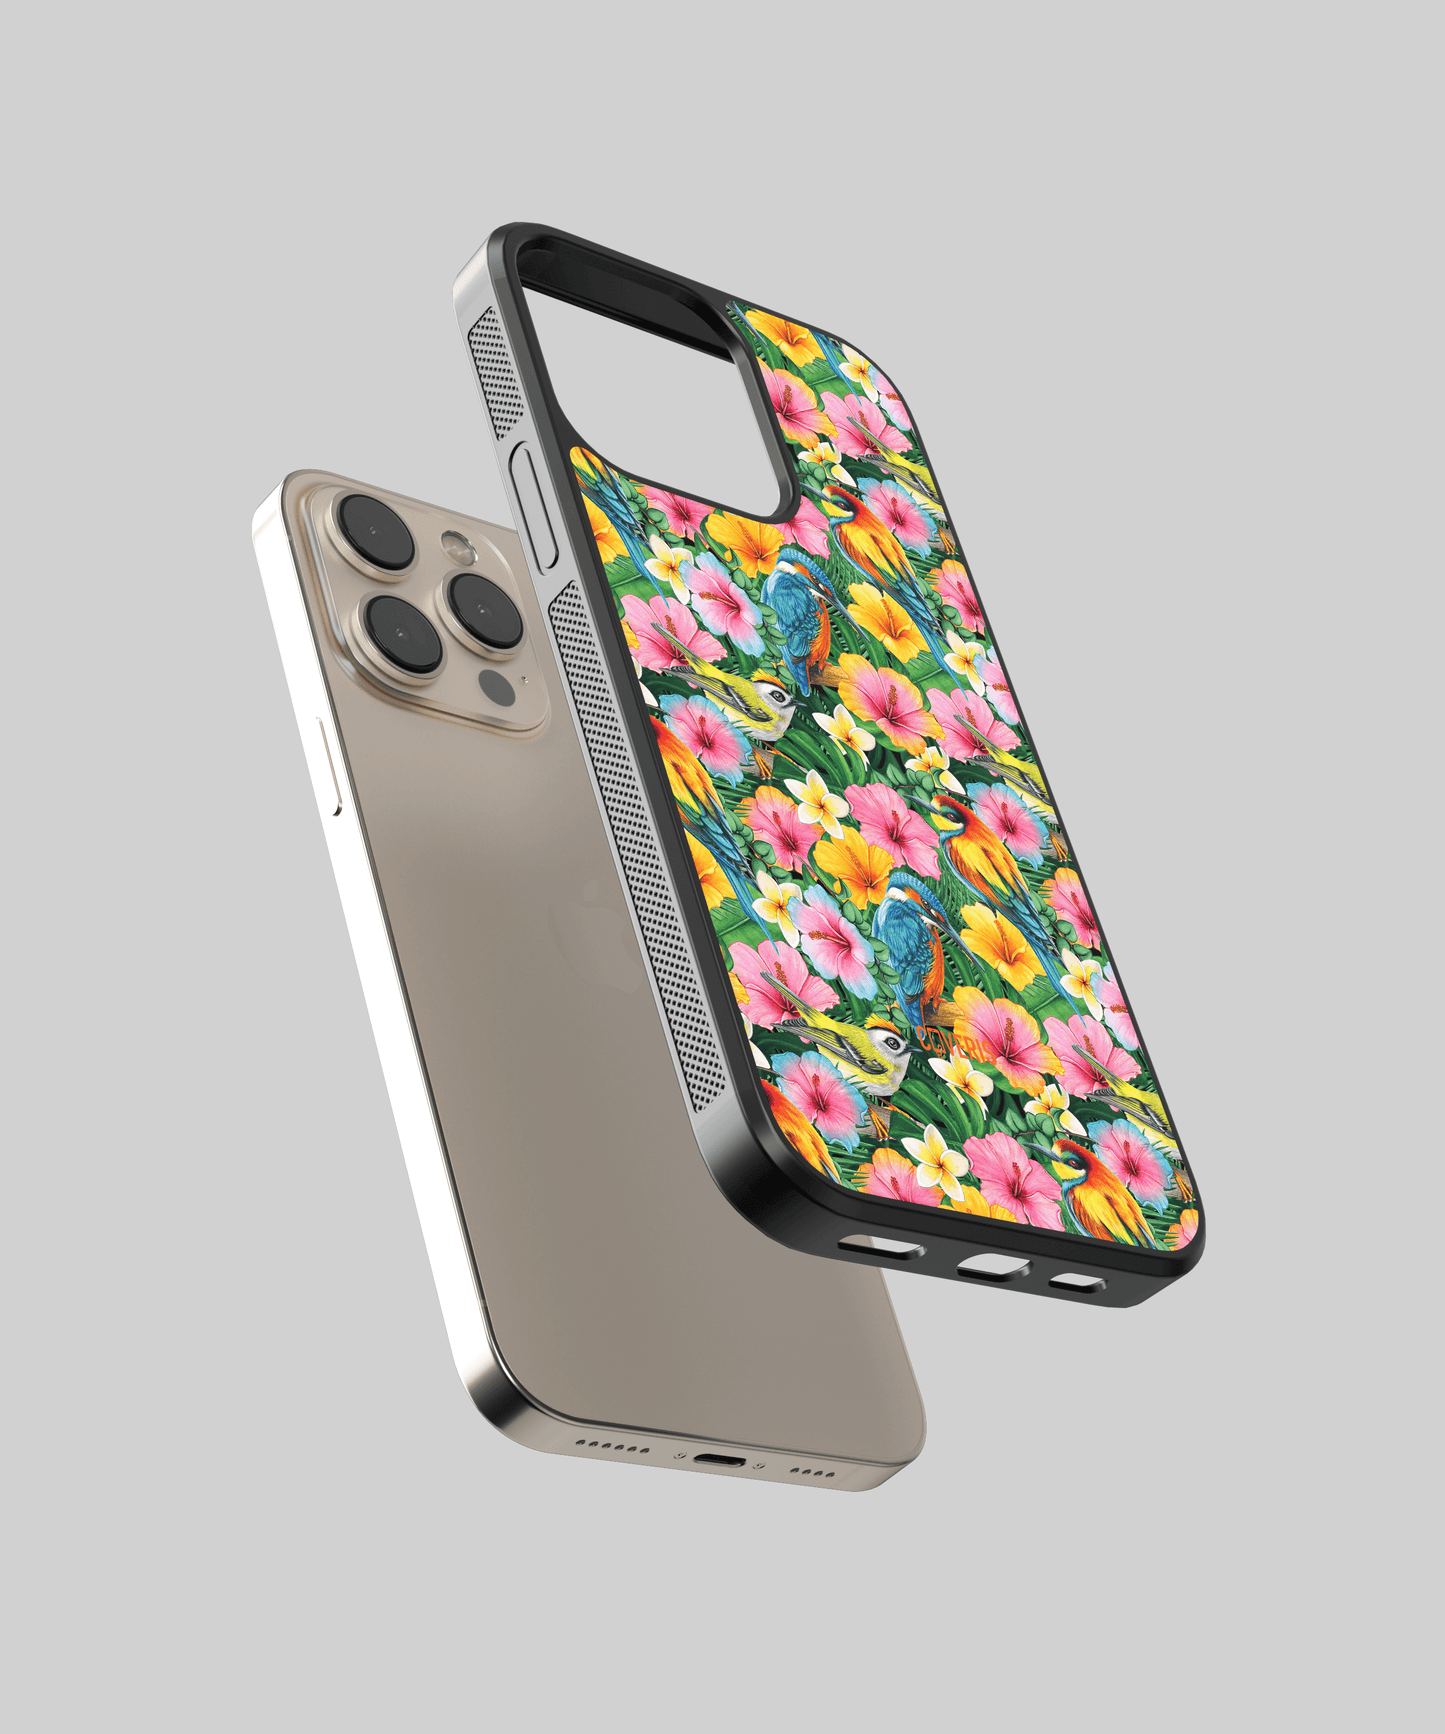 Islander - iPhone 11 pro phone case